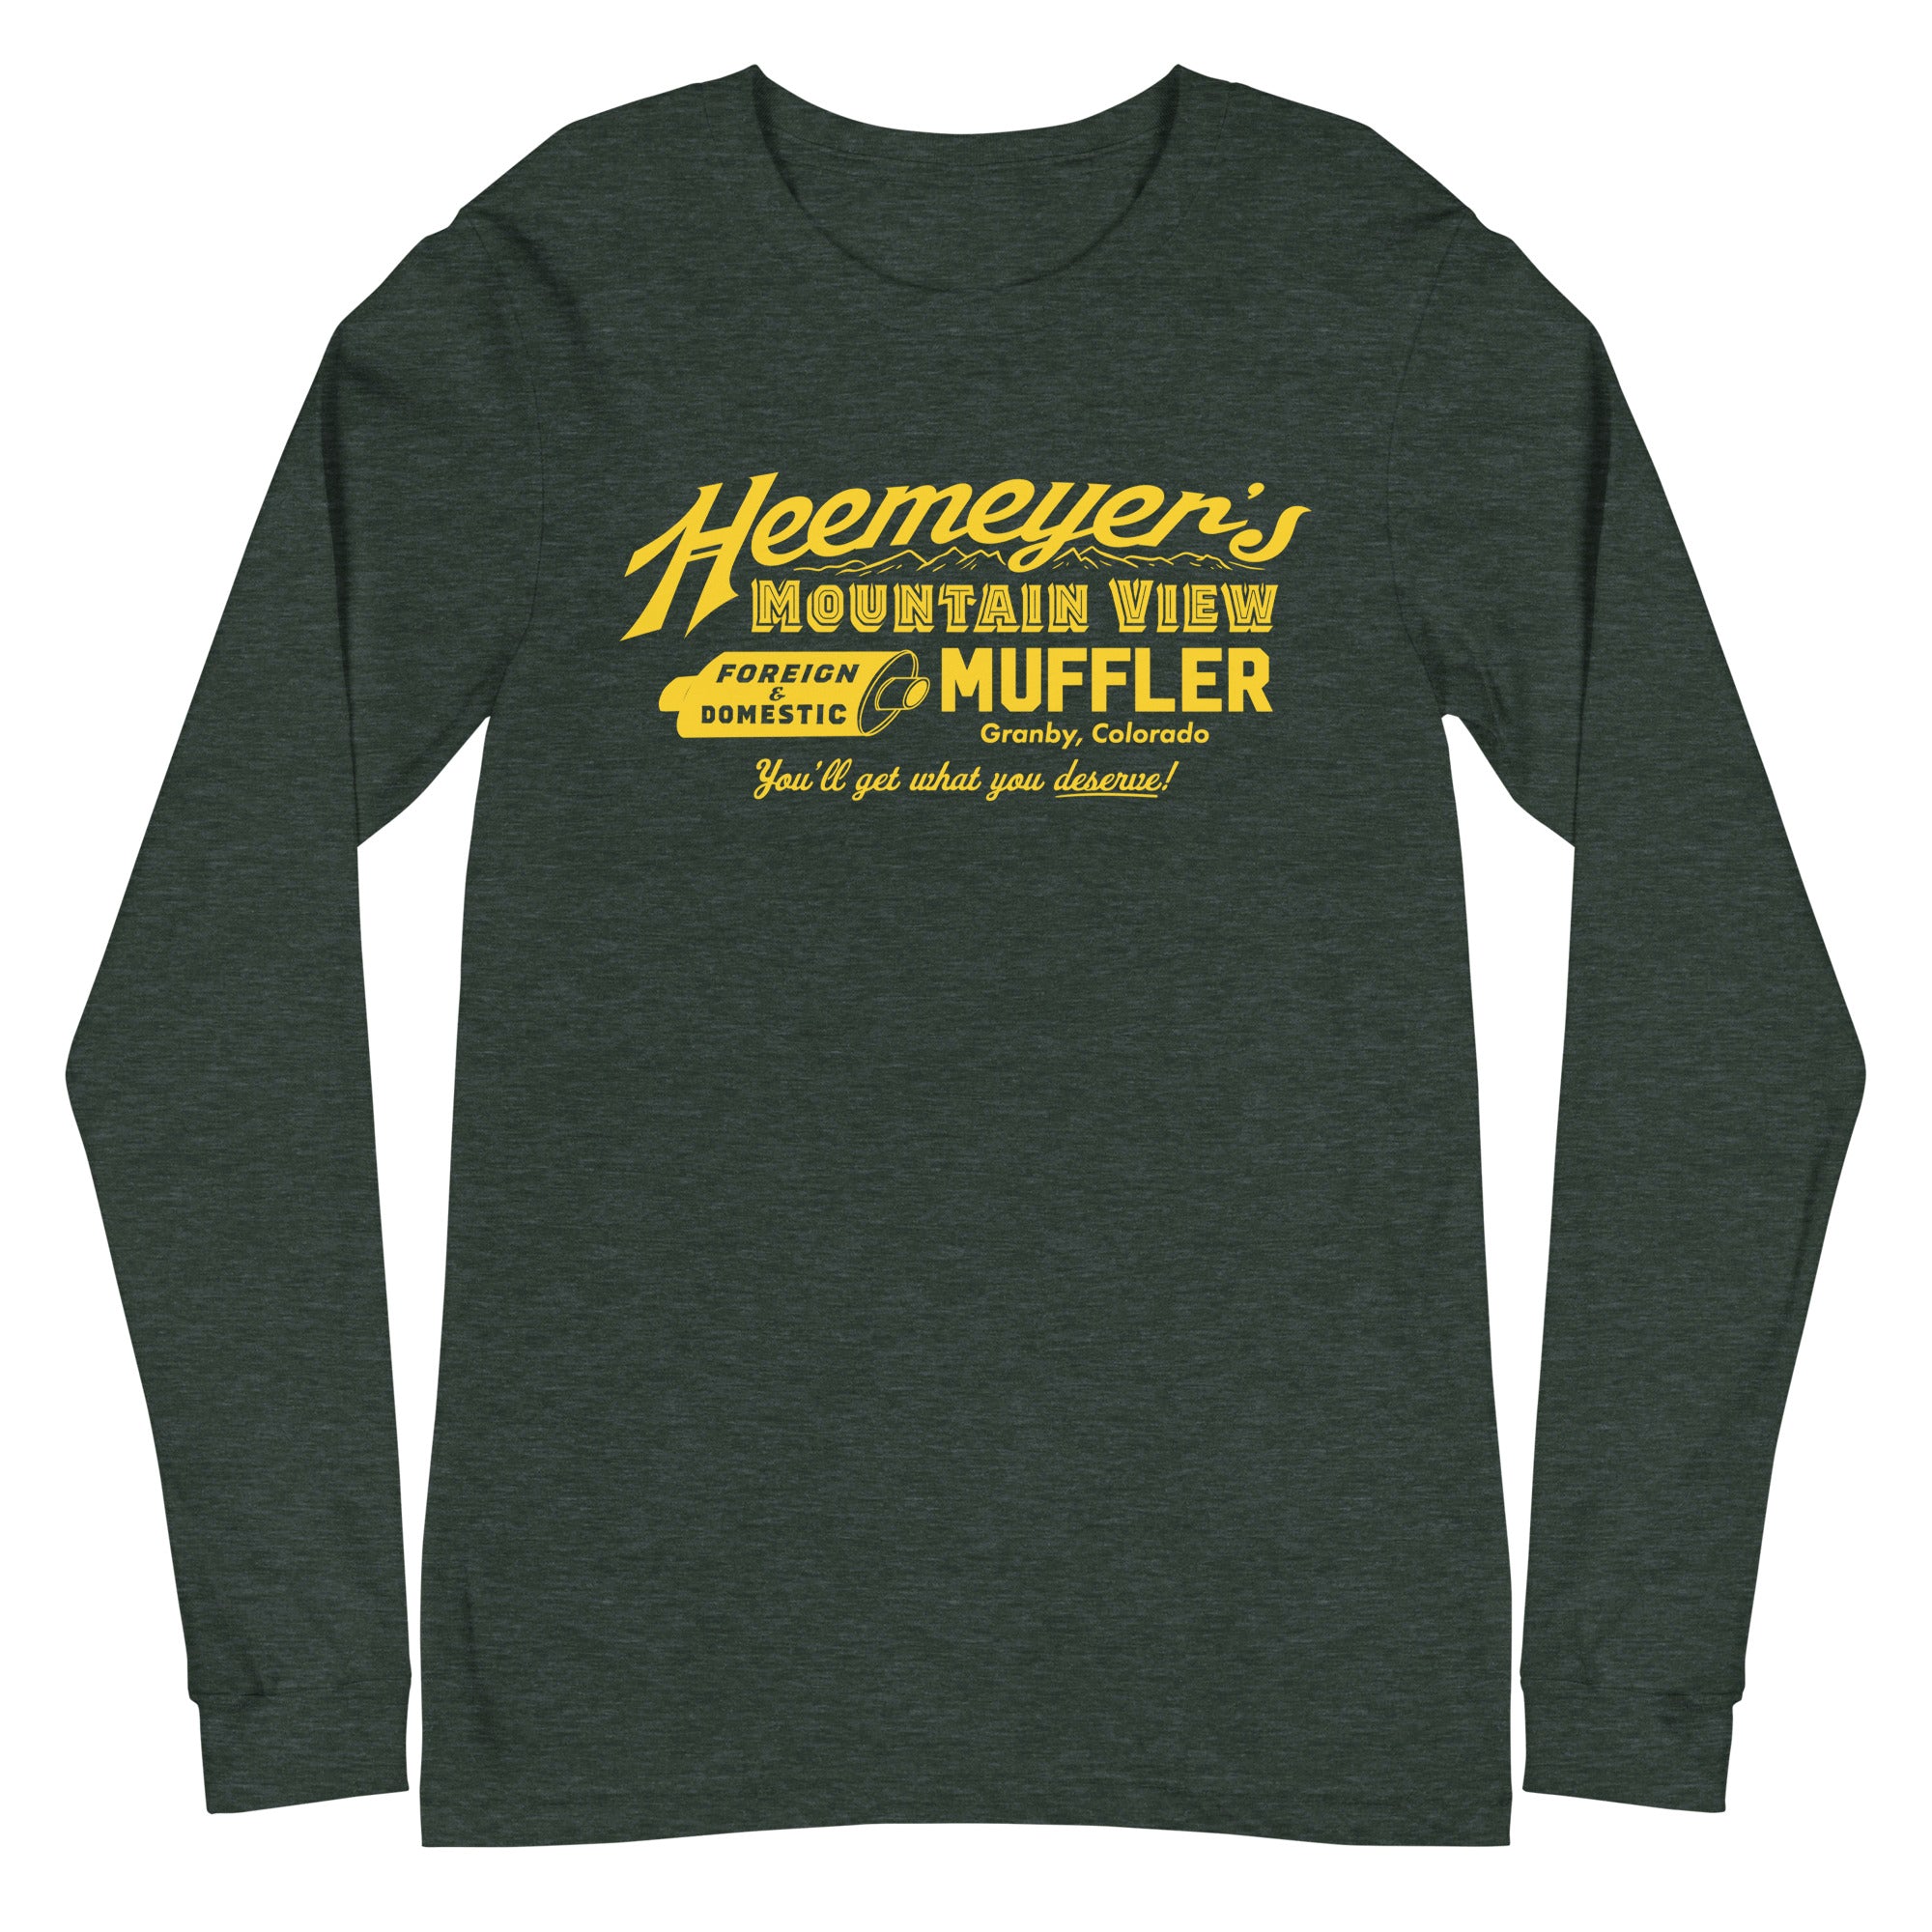 Heemeyer's Mountain View Muffler Long Sleeve Tee